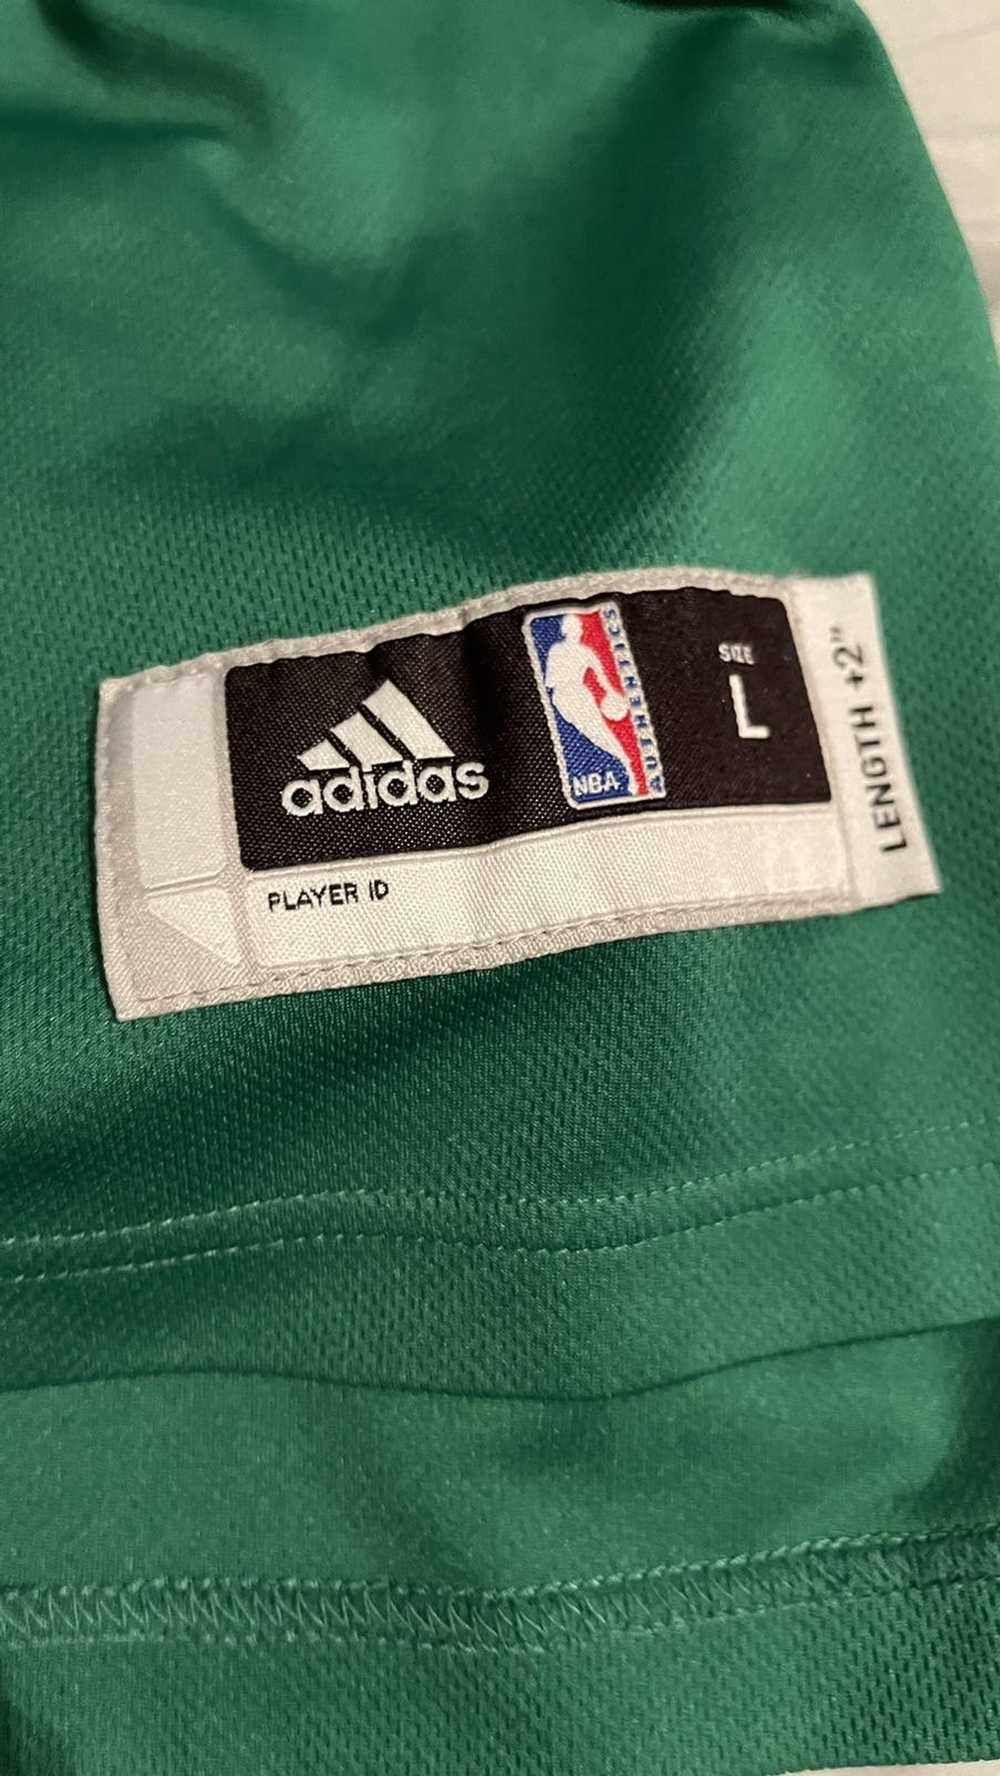 Adidas × NBA Adidas Celtics Rajon Rondo jersey - image 3